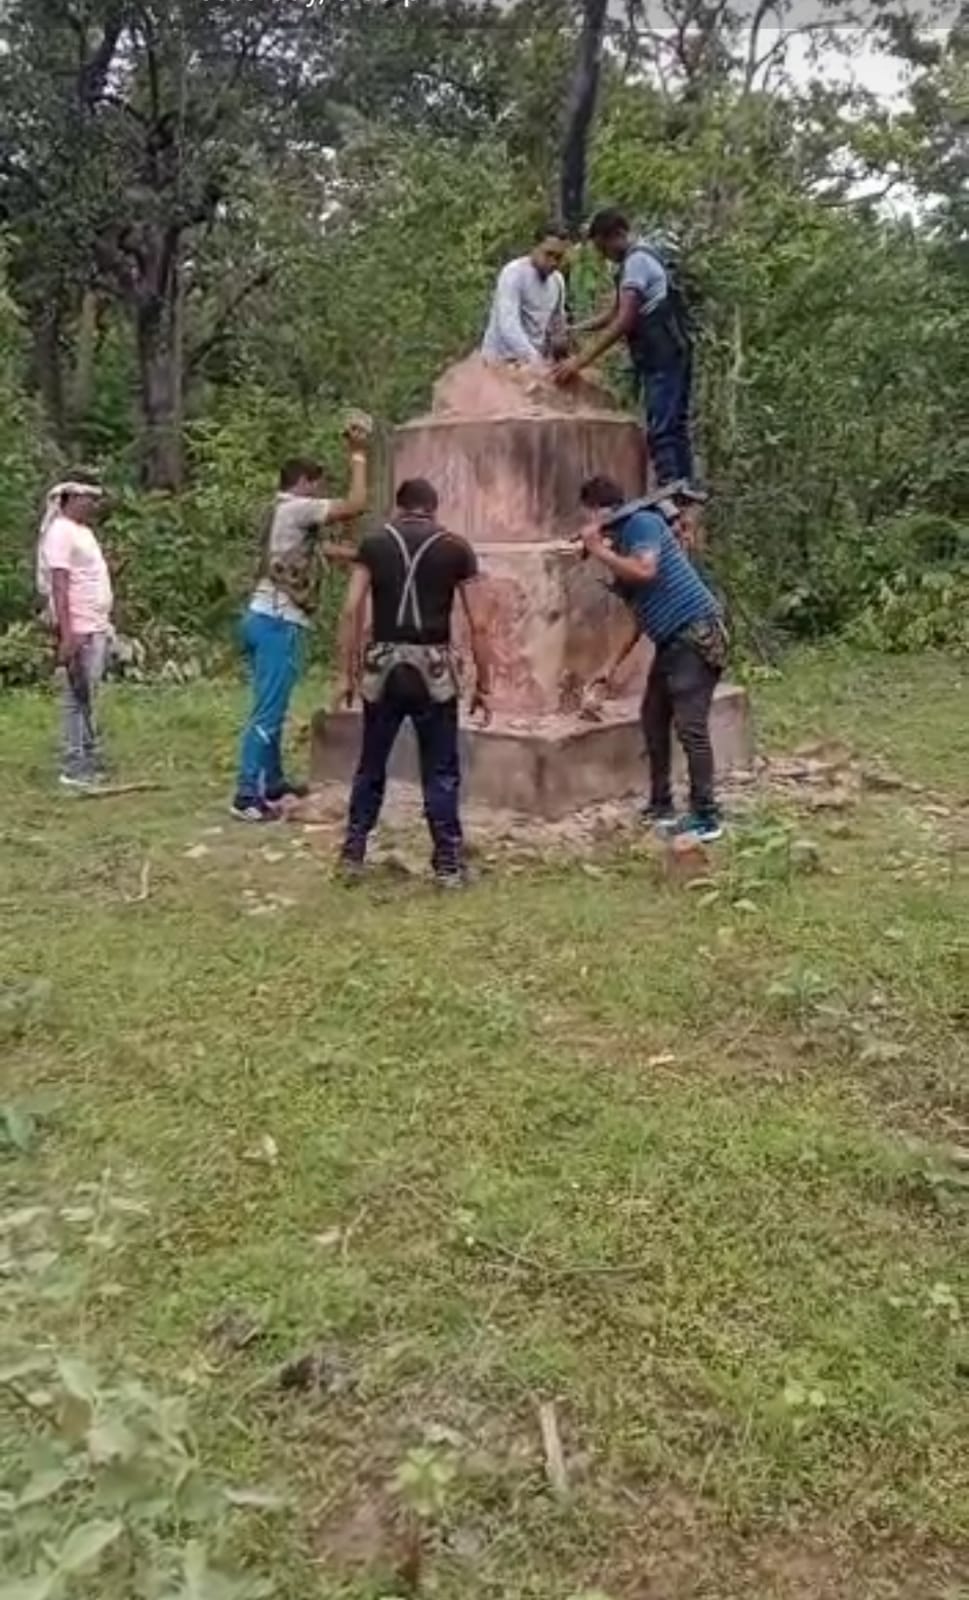 police demolished the Naxalite memorial in bijapur